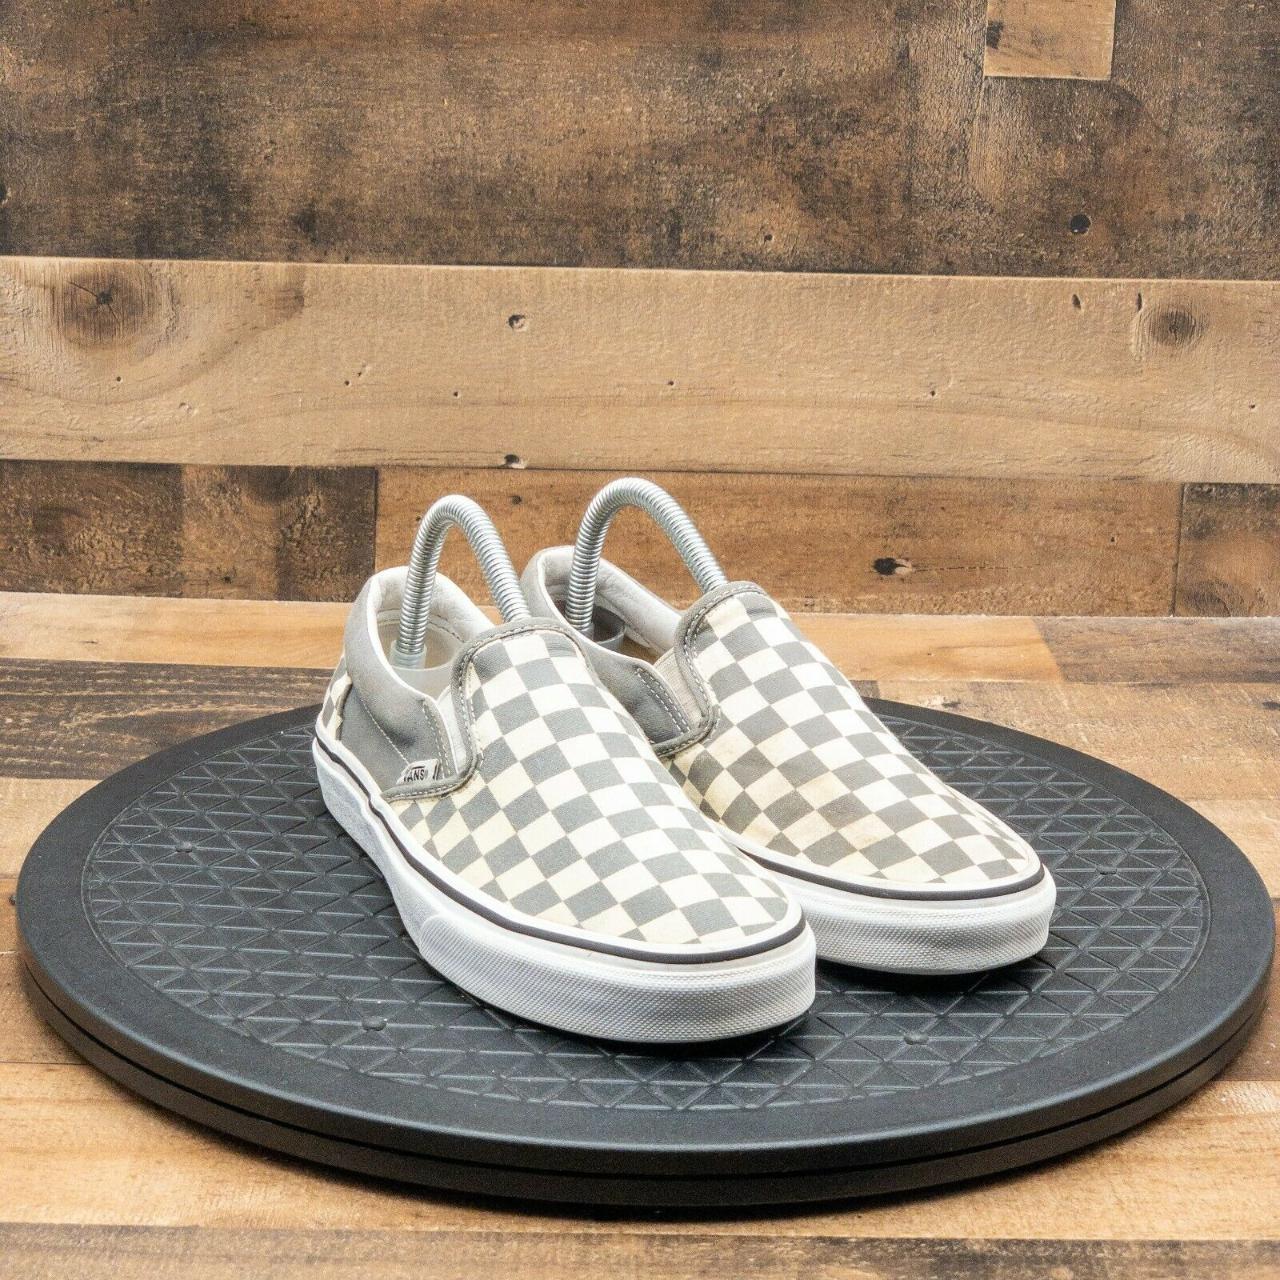 Product Image 1 - Vans Women's Casual Shoes Sneaker